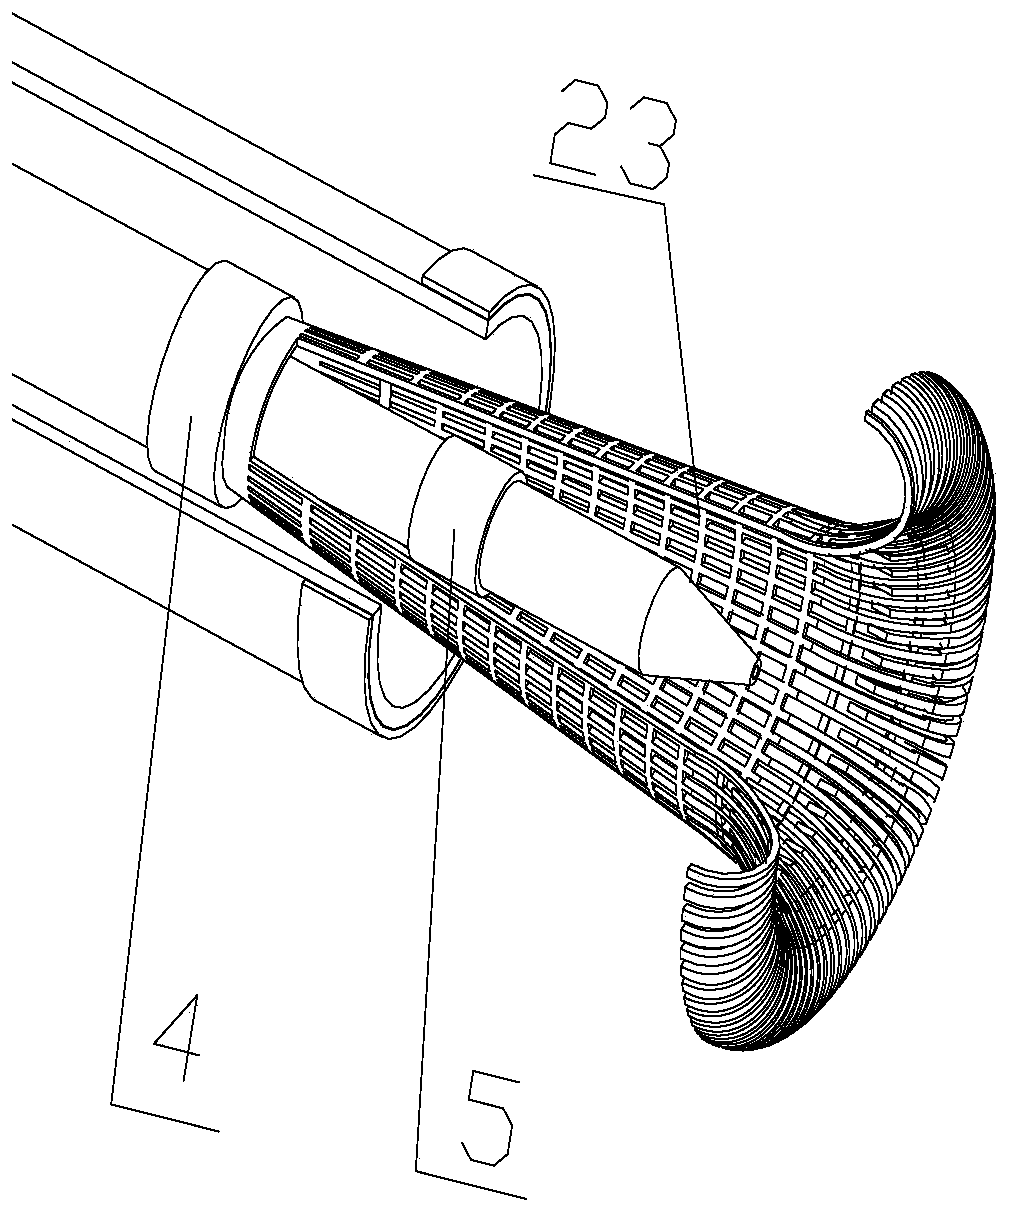 Membrane rupturing device of aorta membrane coated stent